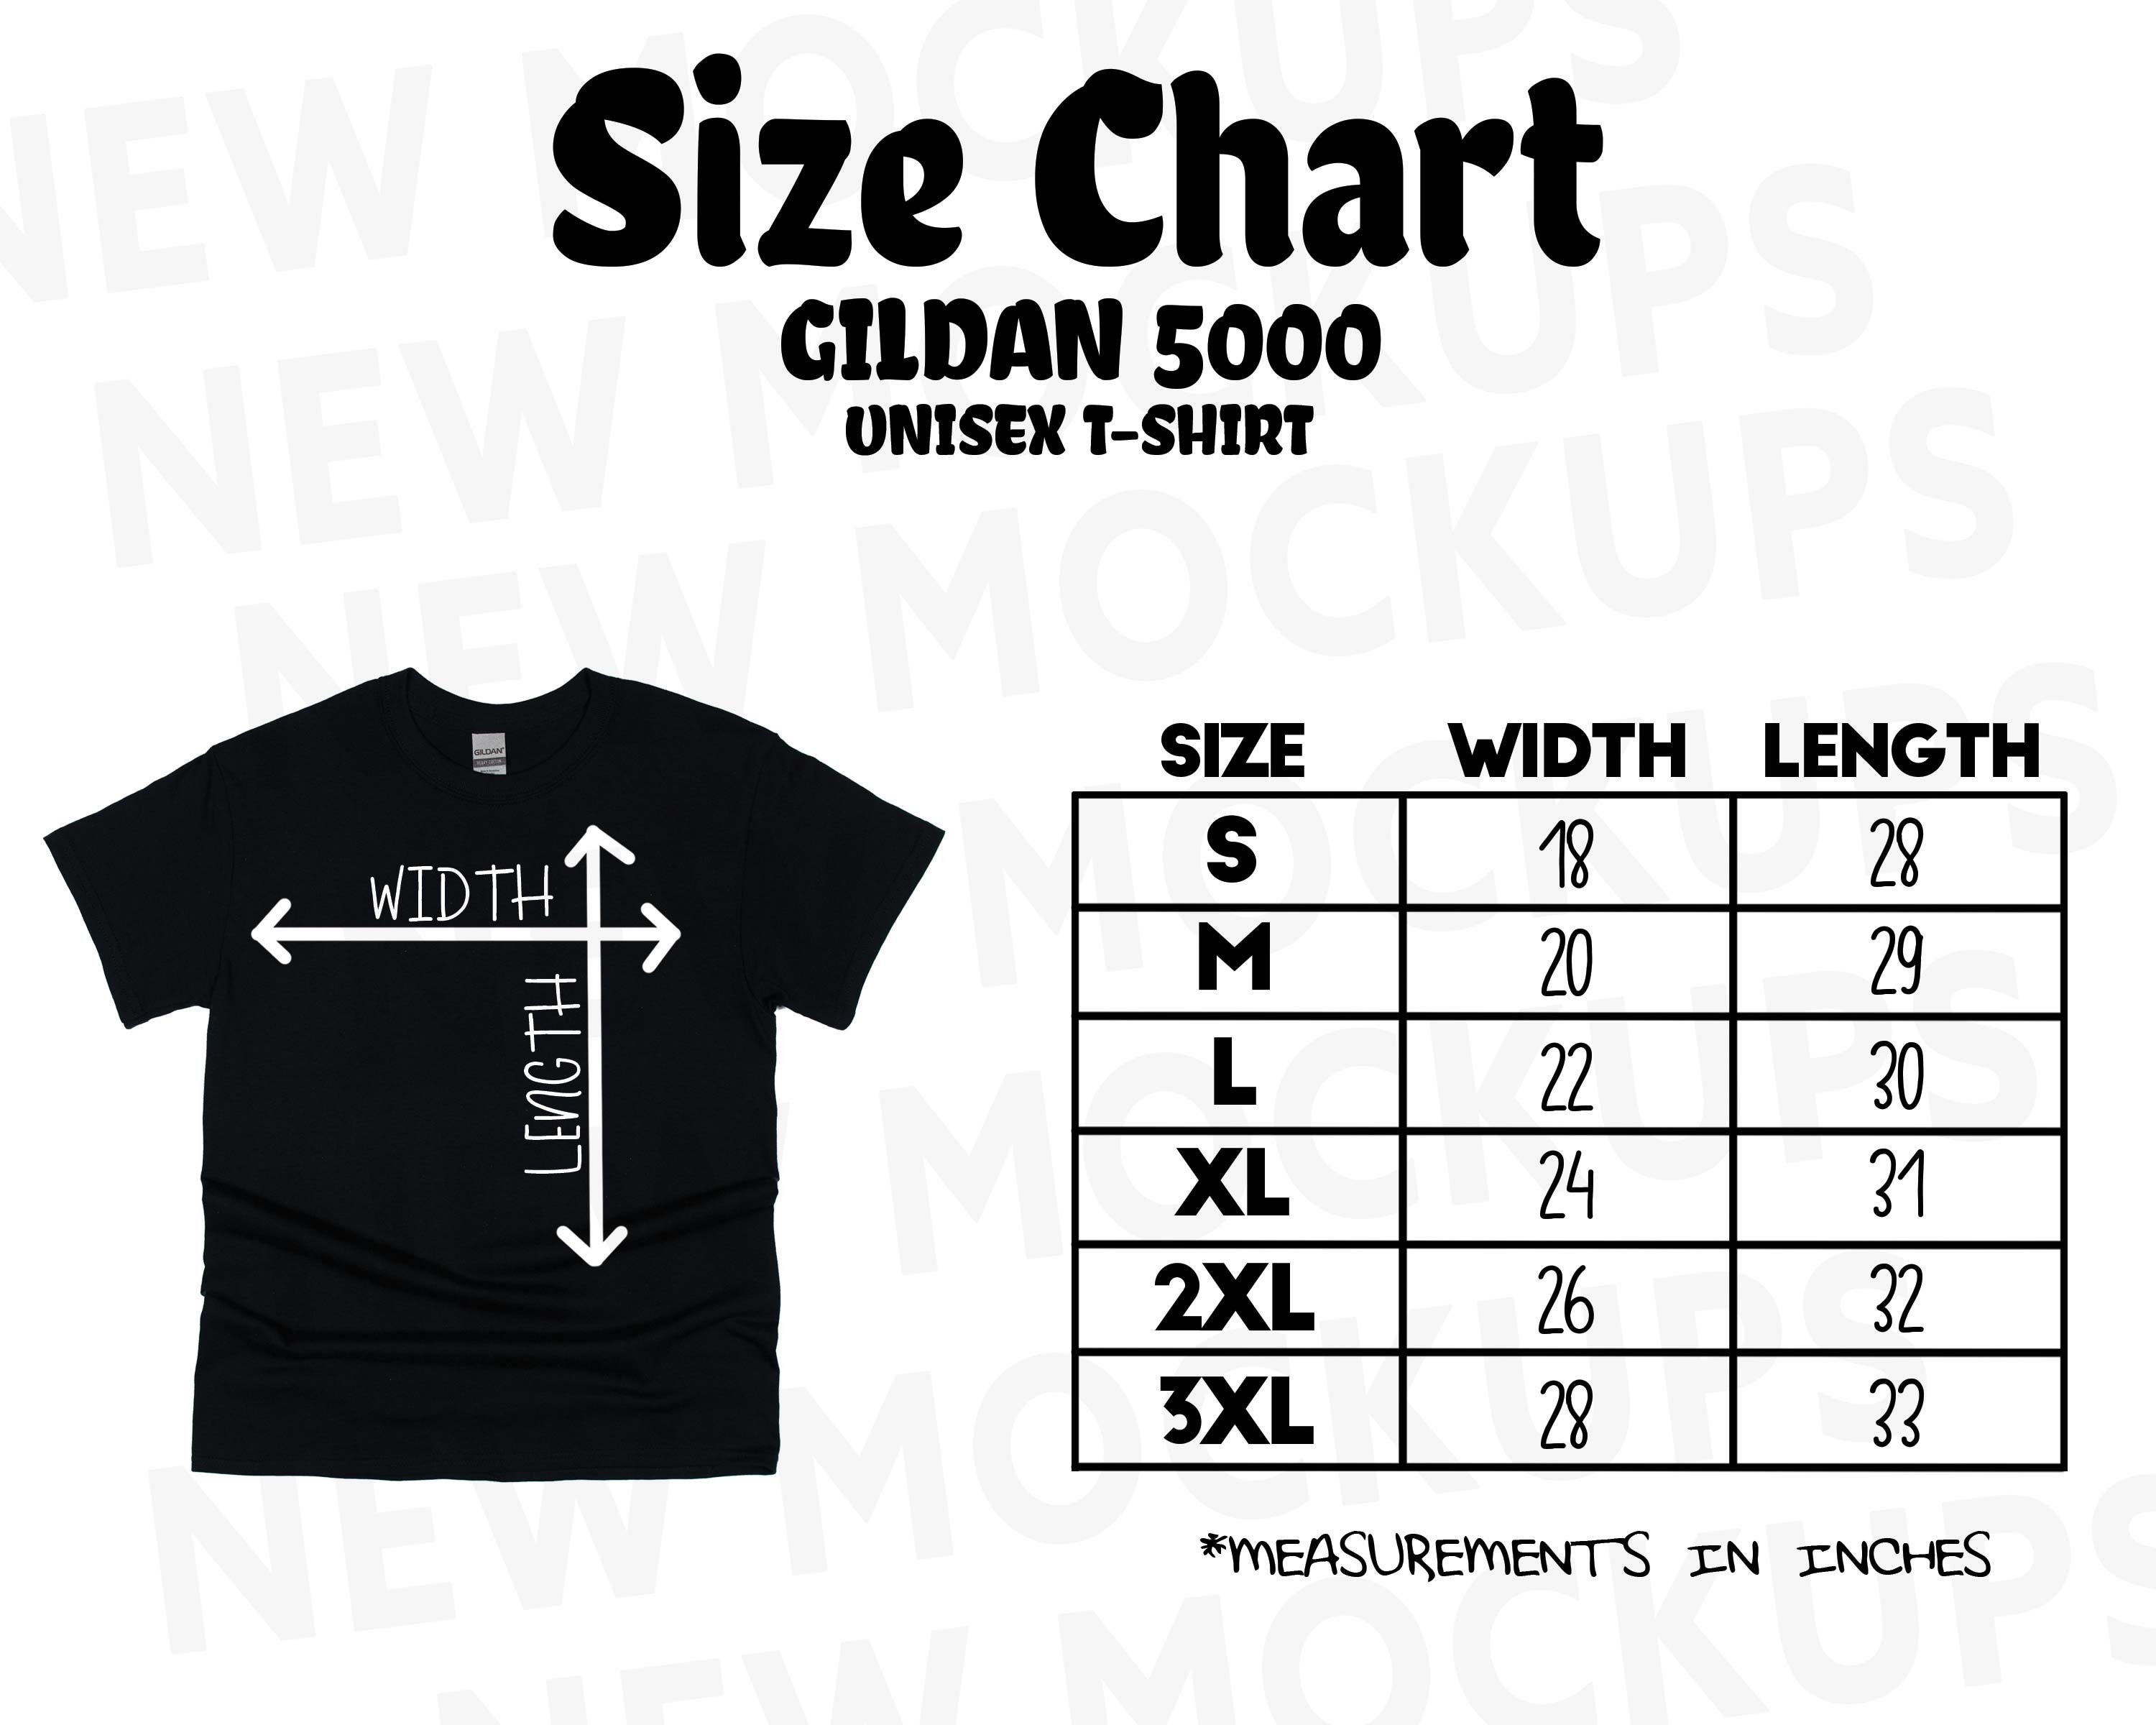 buy-gildan-men-s-shirt-size-chart-off-57